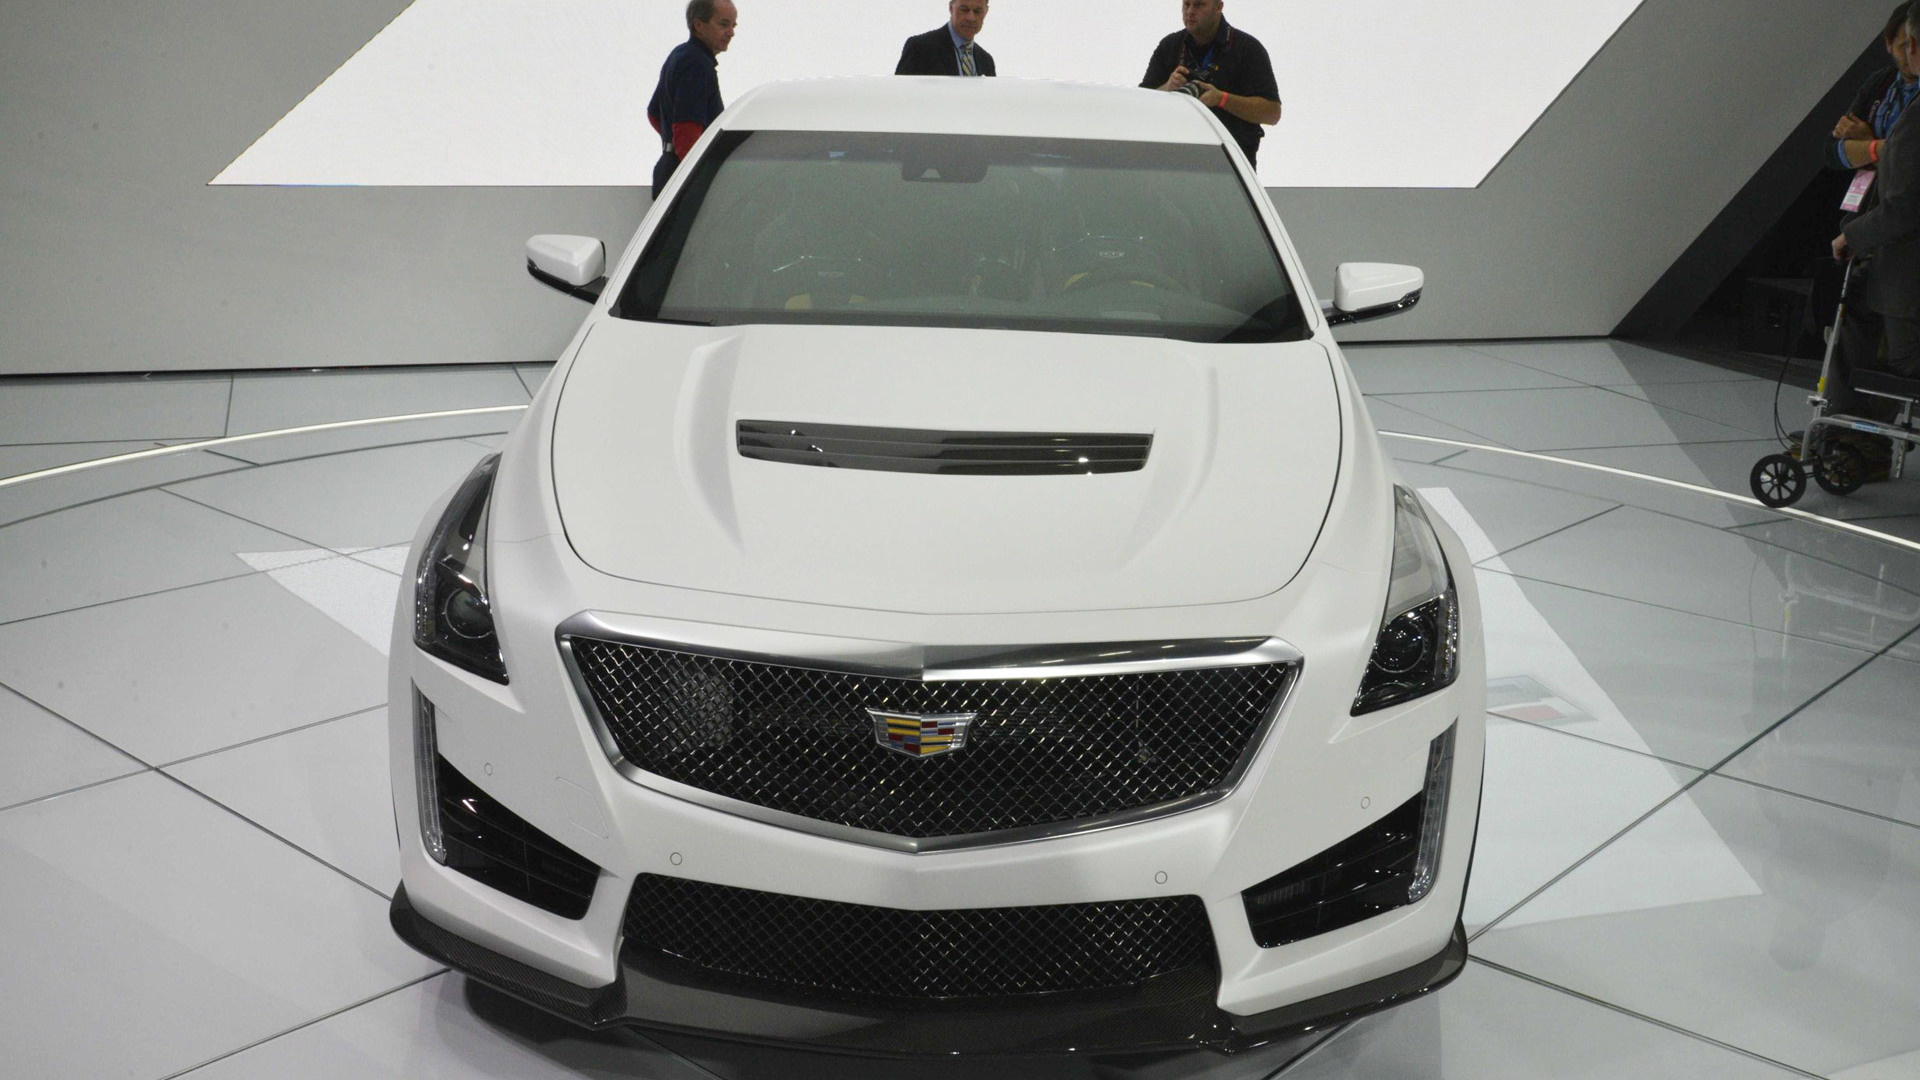 2016 Cadillac CTS-V live photos, 2015 Detroit Auto Show